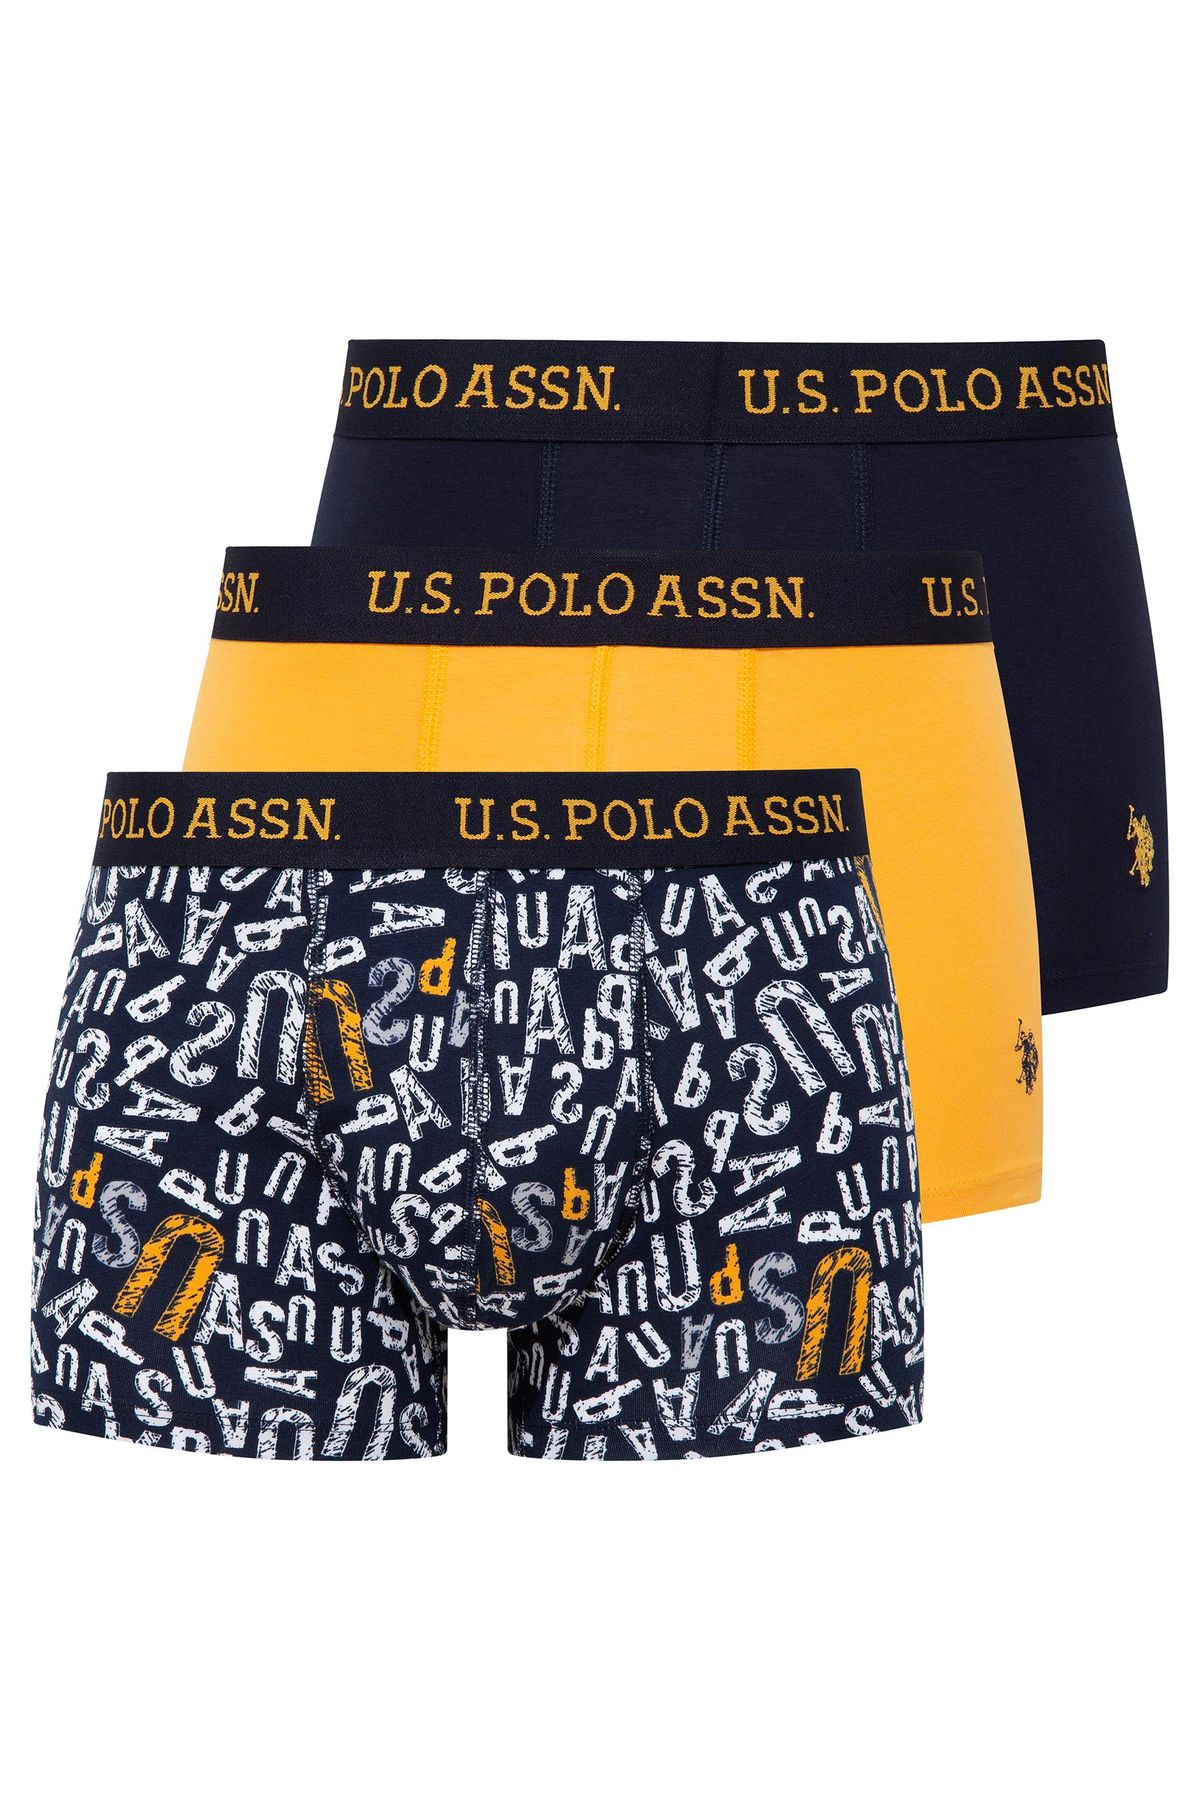 U.S. Polo Assn. U.S. POLO ASSN. - Erkek Sarı - Baskılı- Lacivert 3 lü Boxer Z.8.0.ET.4.A.G9.R.7.P